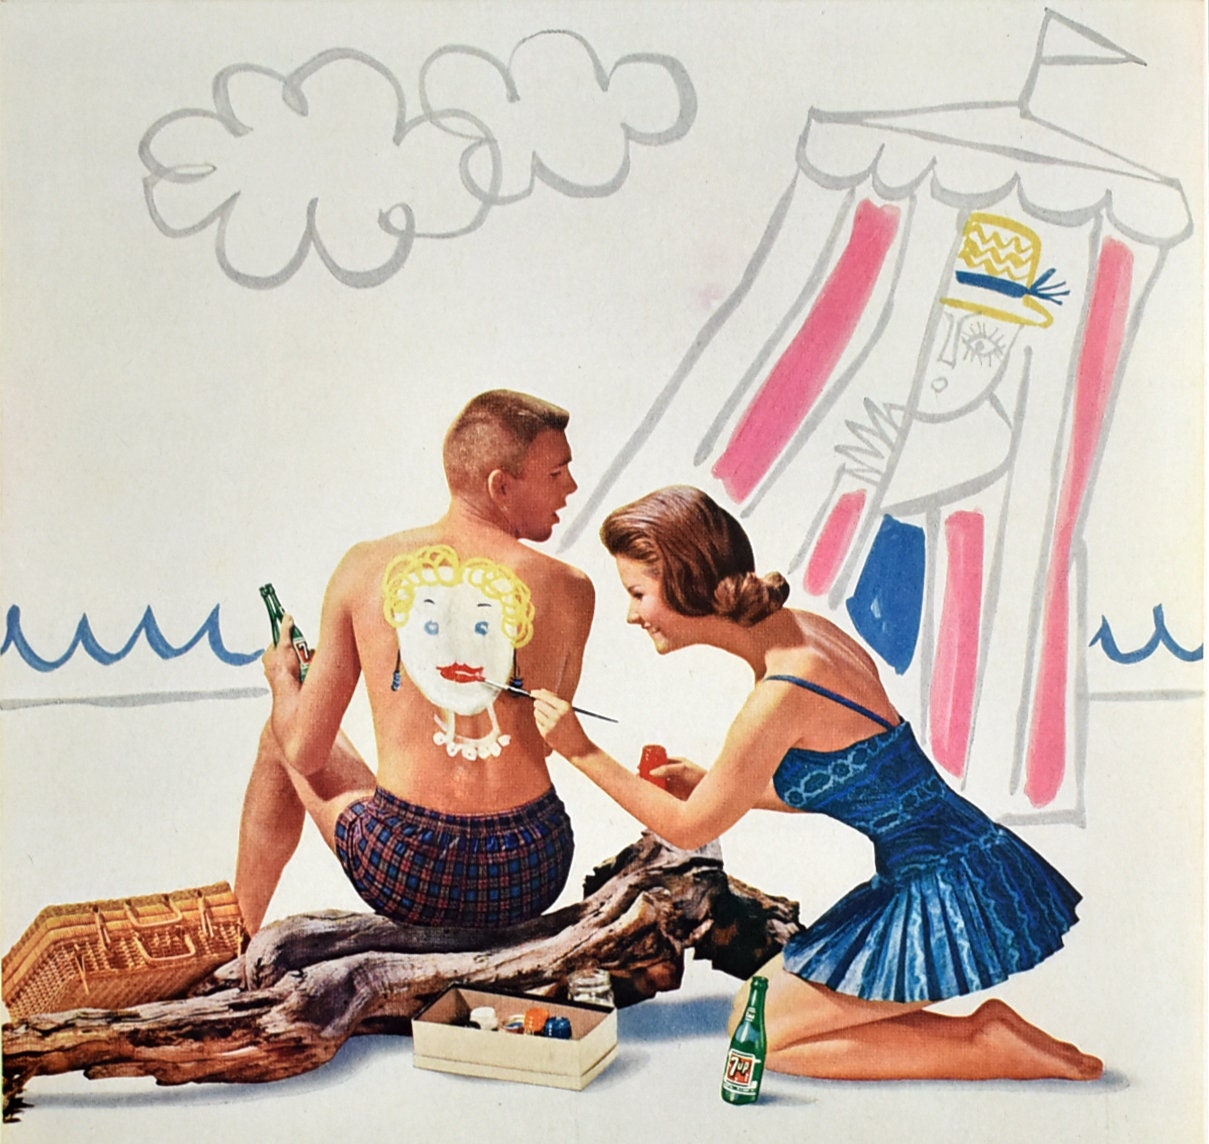 Vintage 1962 7 up Soda Ad, Retro 60s Beach Wall Art, Whimsical